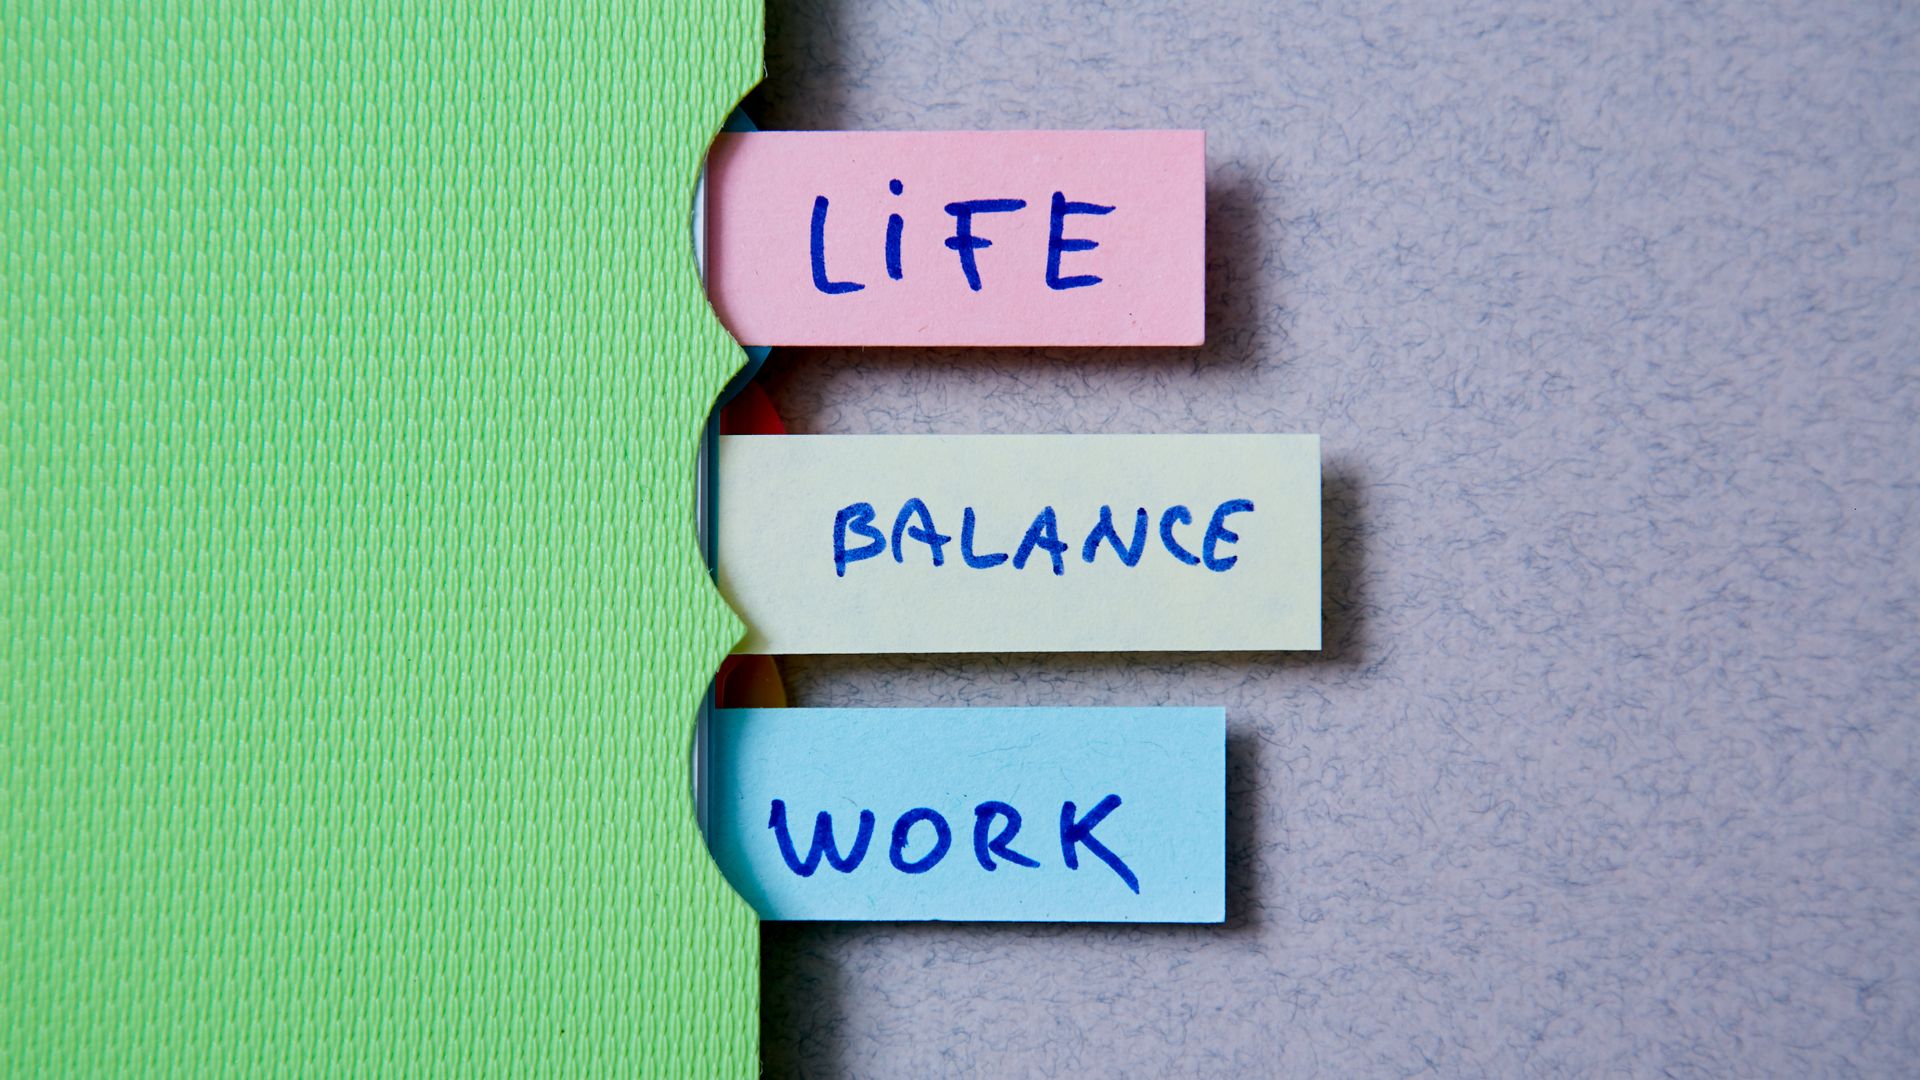 New life work. Work-Life Balance.